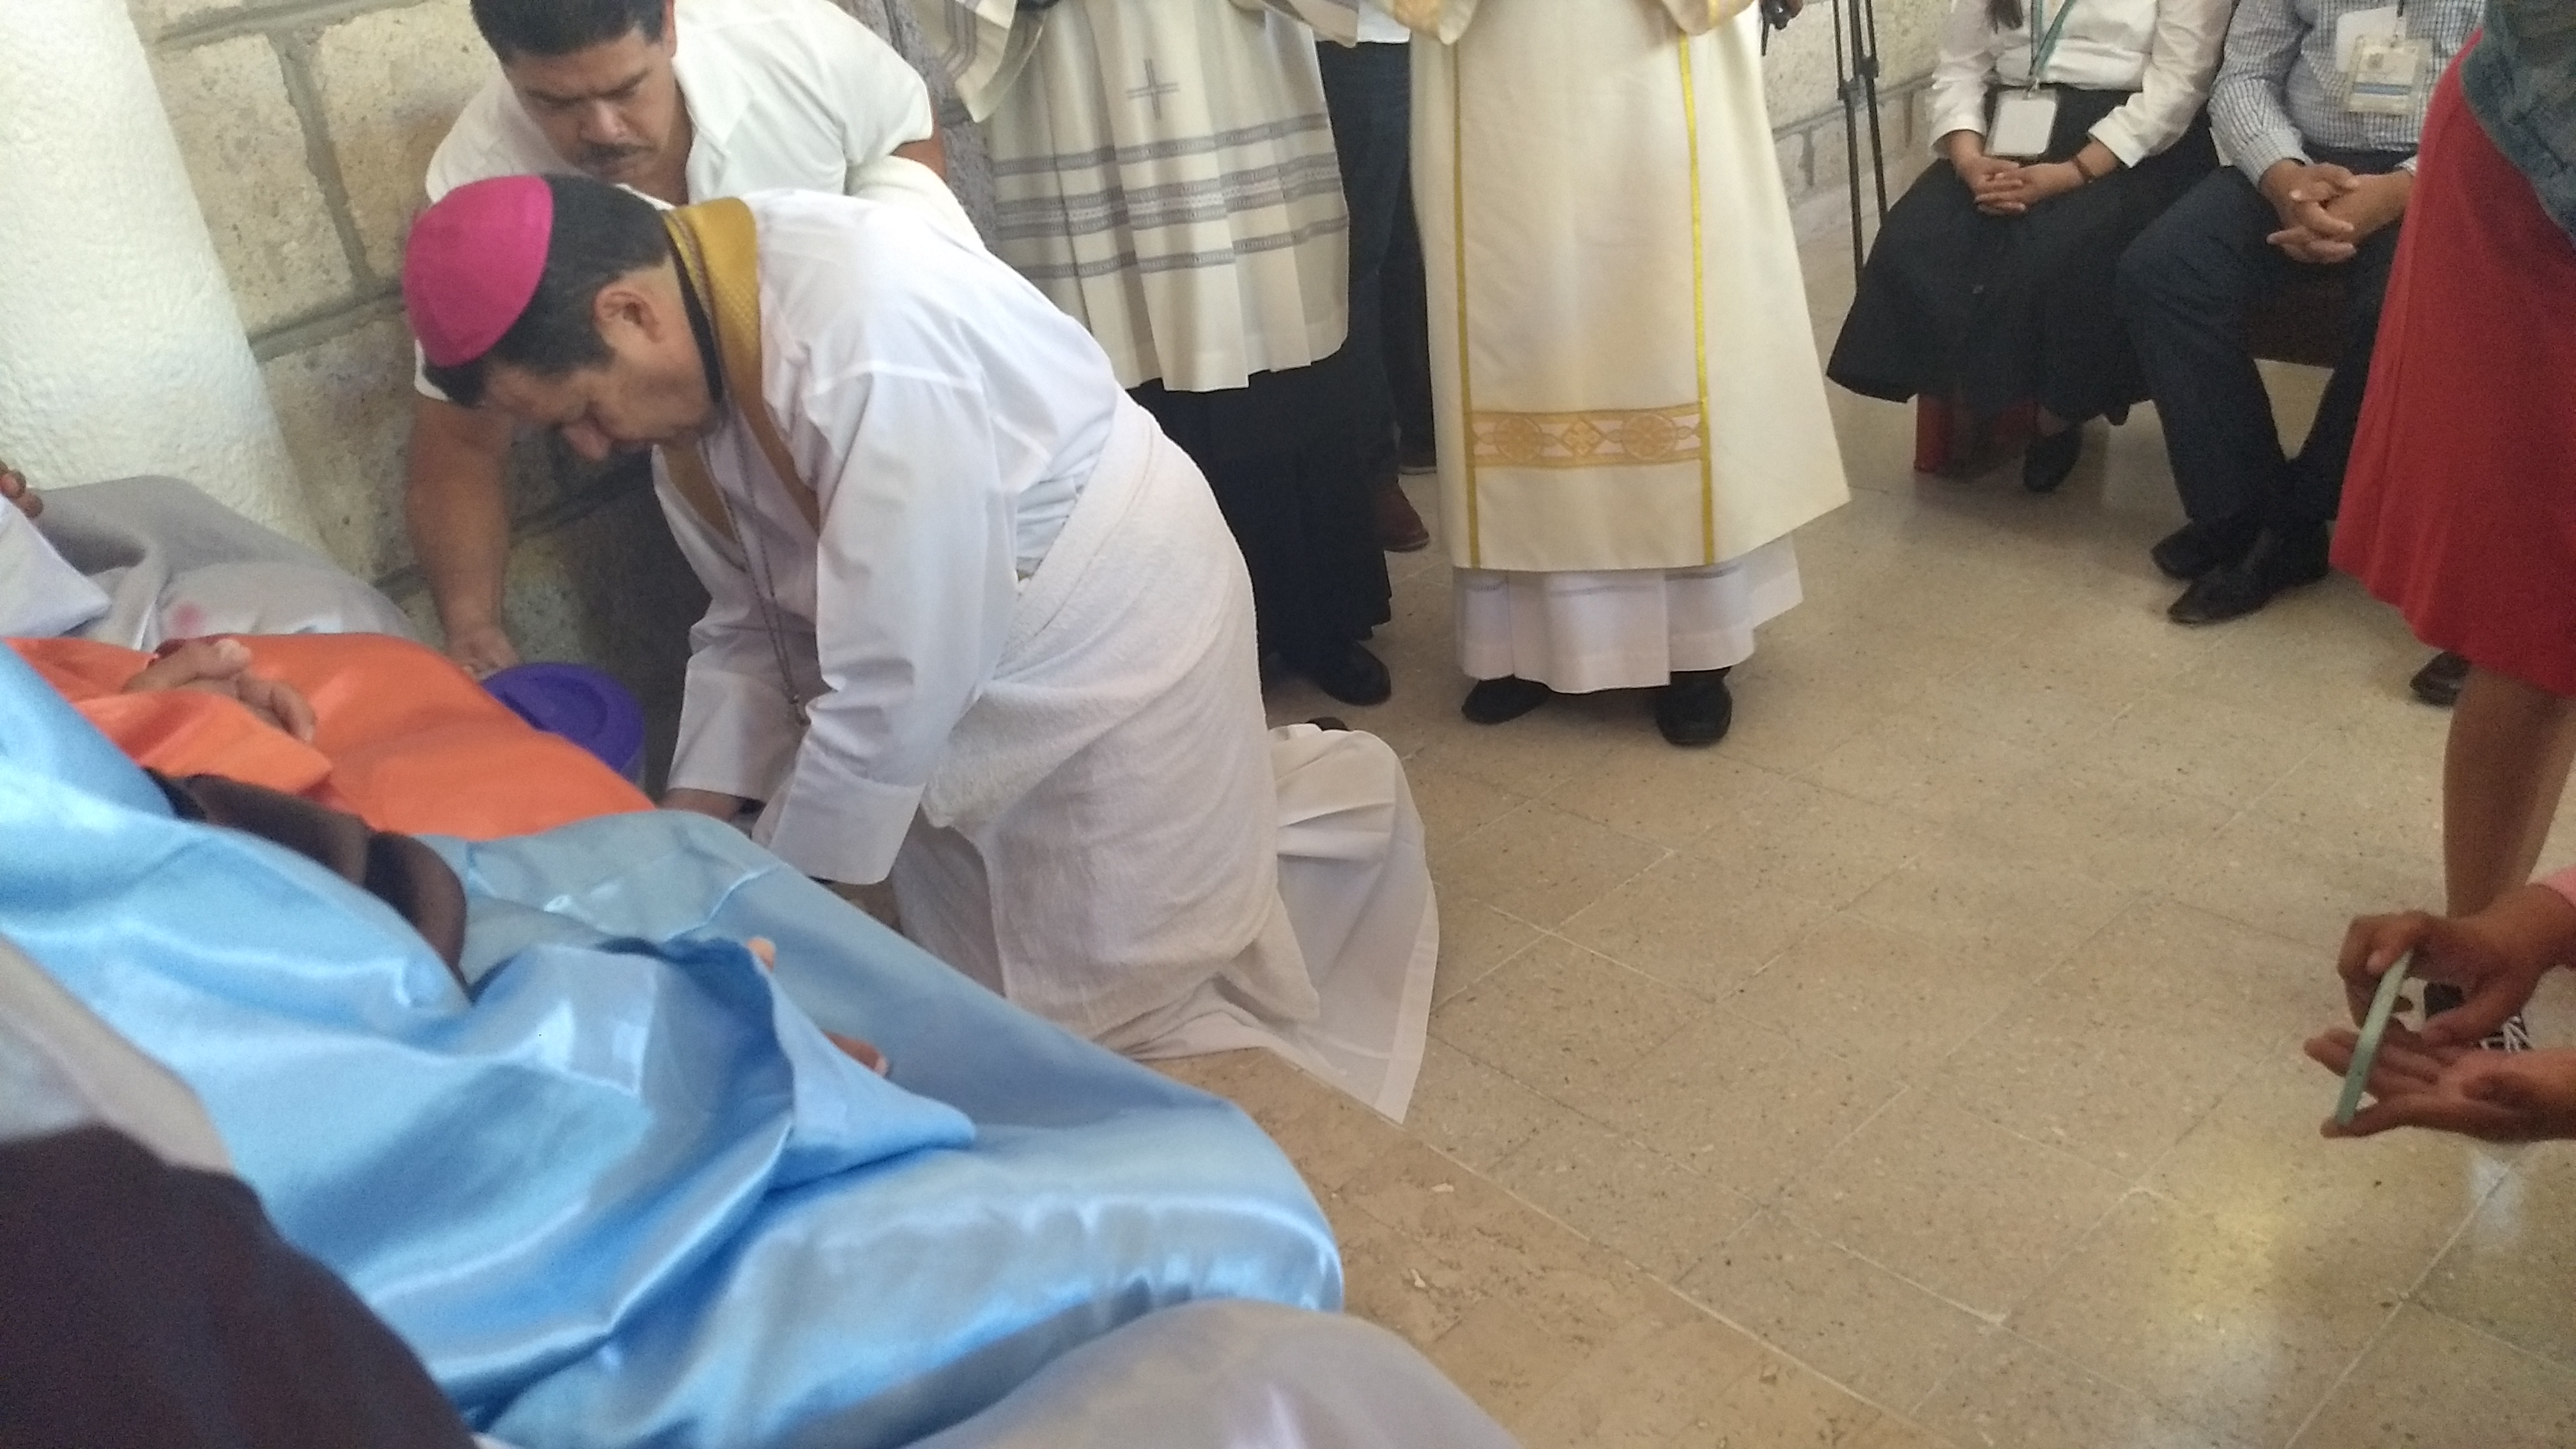  Realiza Obispo lavatorio de pies a presos del penal de San JosA� el Alto